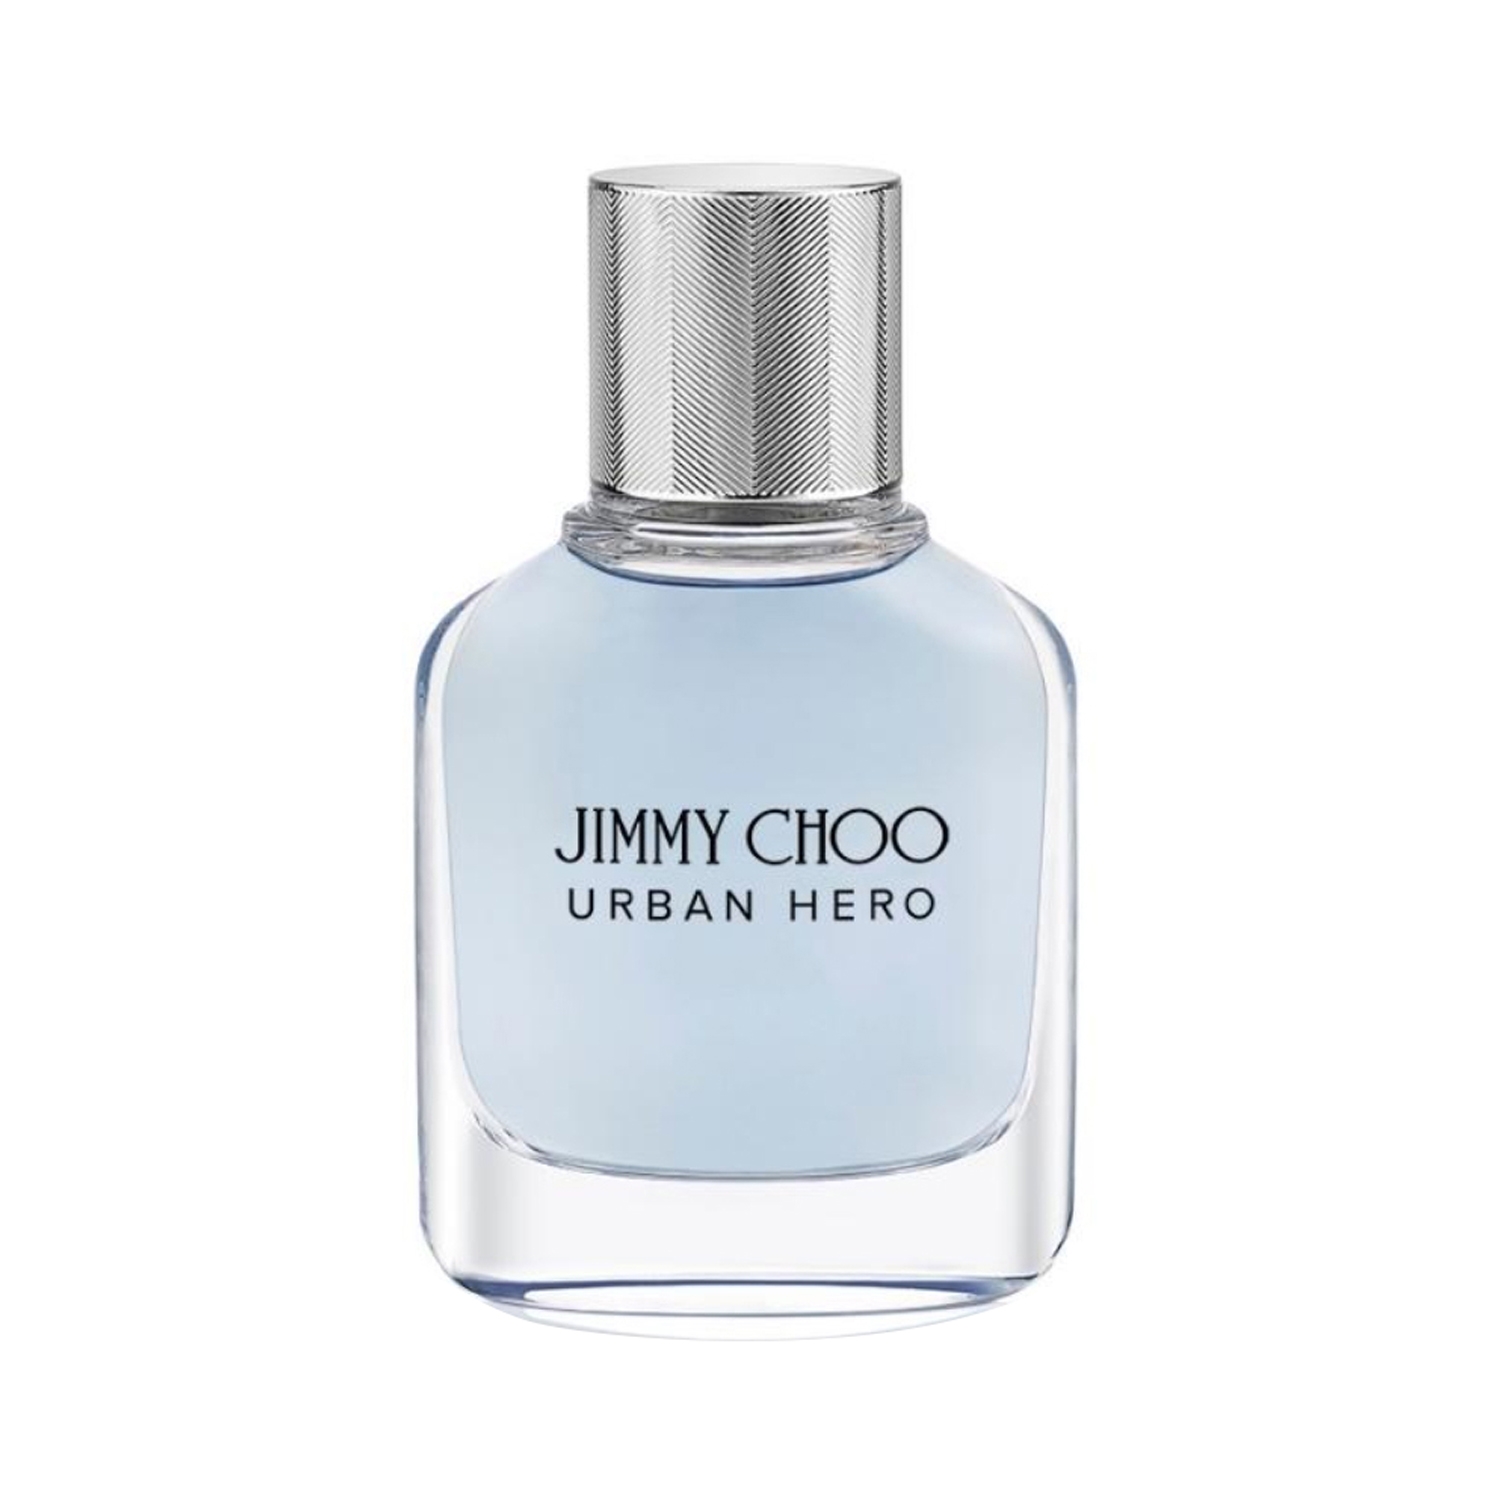 Jimmy Choo Fever 10ml 0.33 Oz Eau De Parfum Purse Spray - for sale online |  eBay